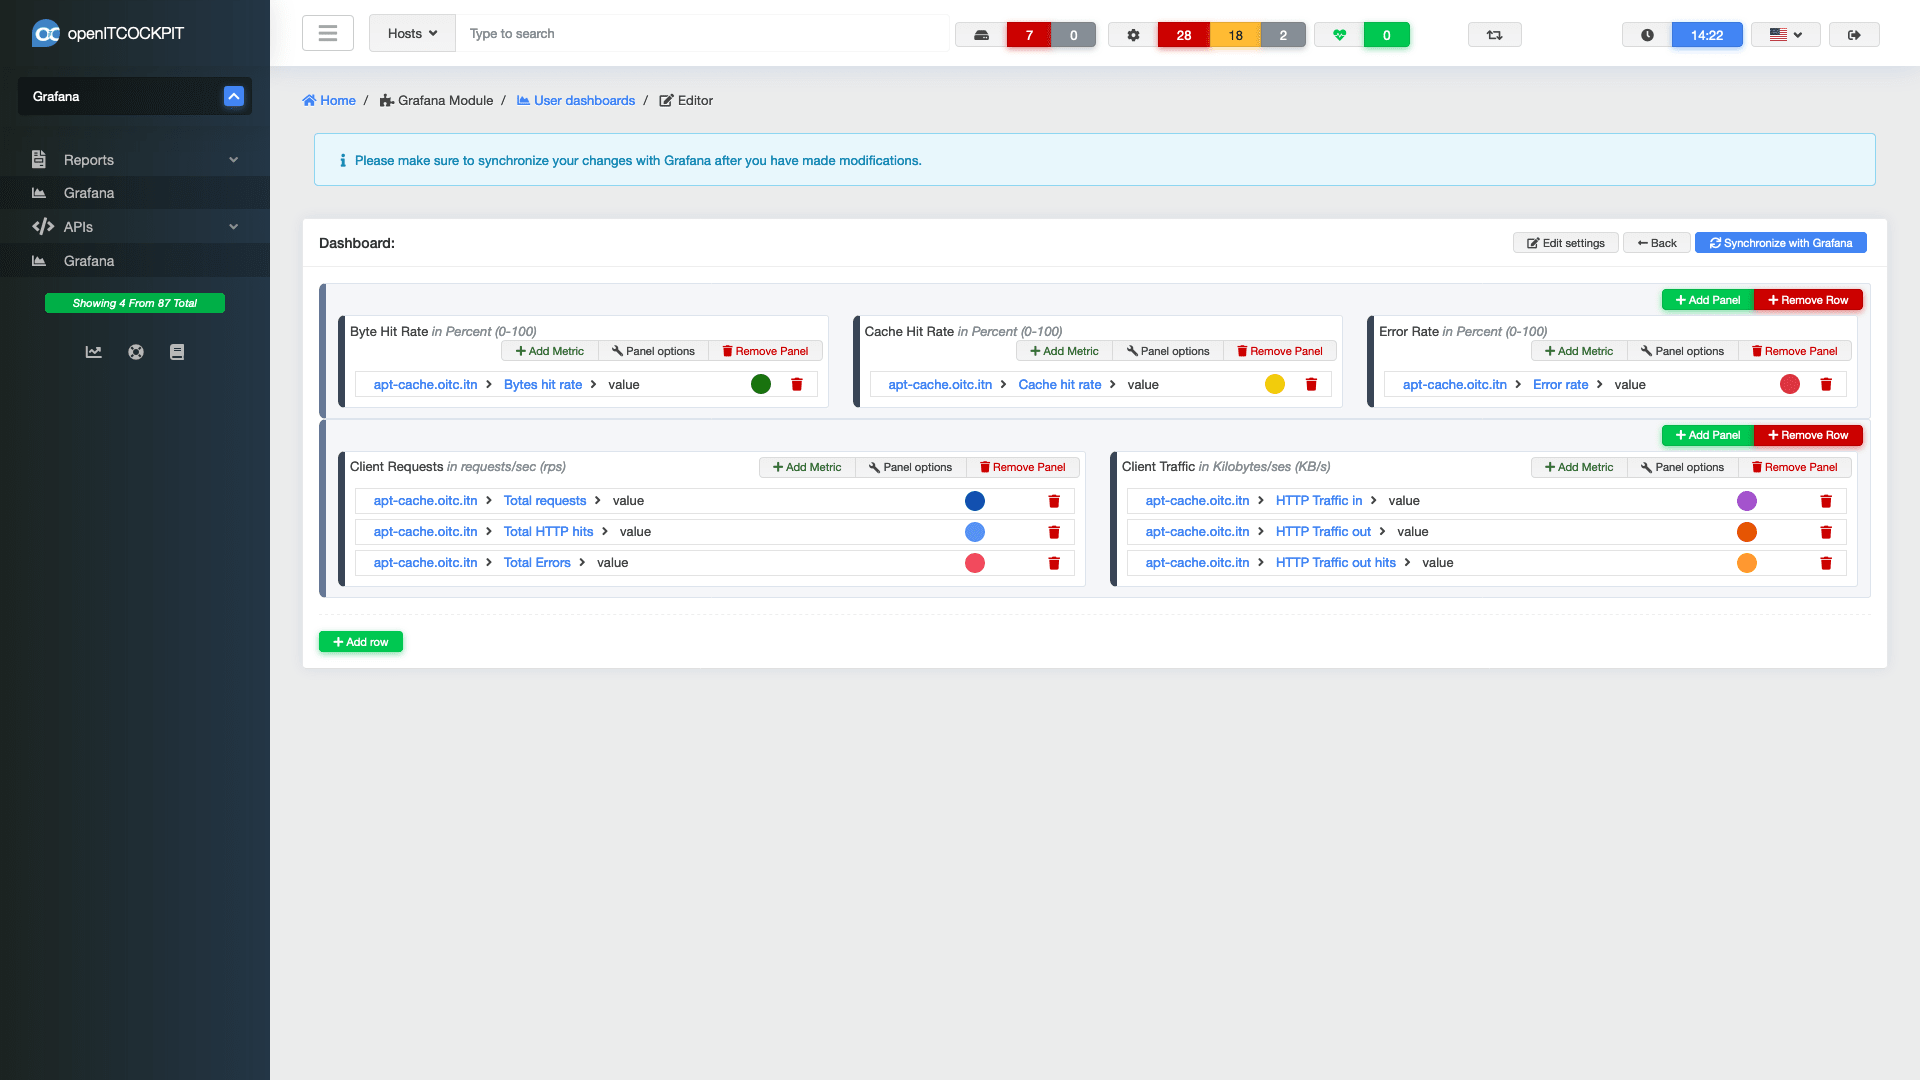 Create custom Grafana dashboards directly from openITCOCKPIT.